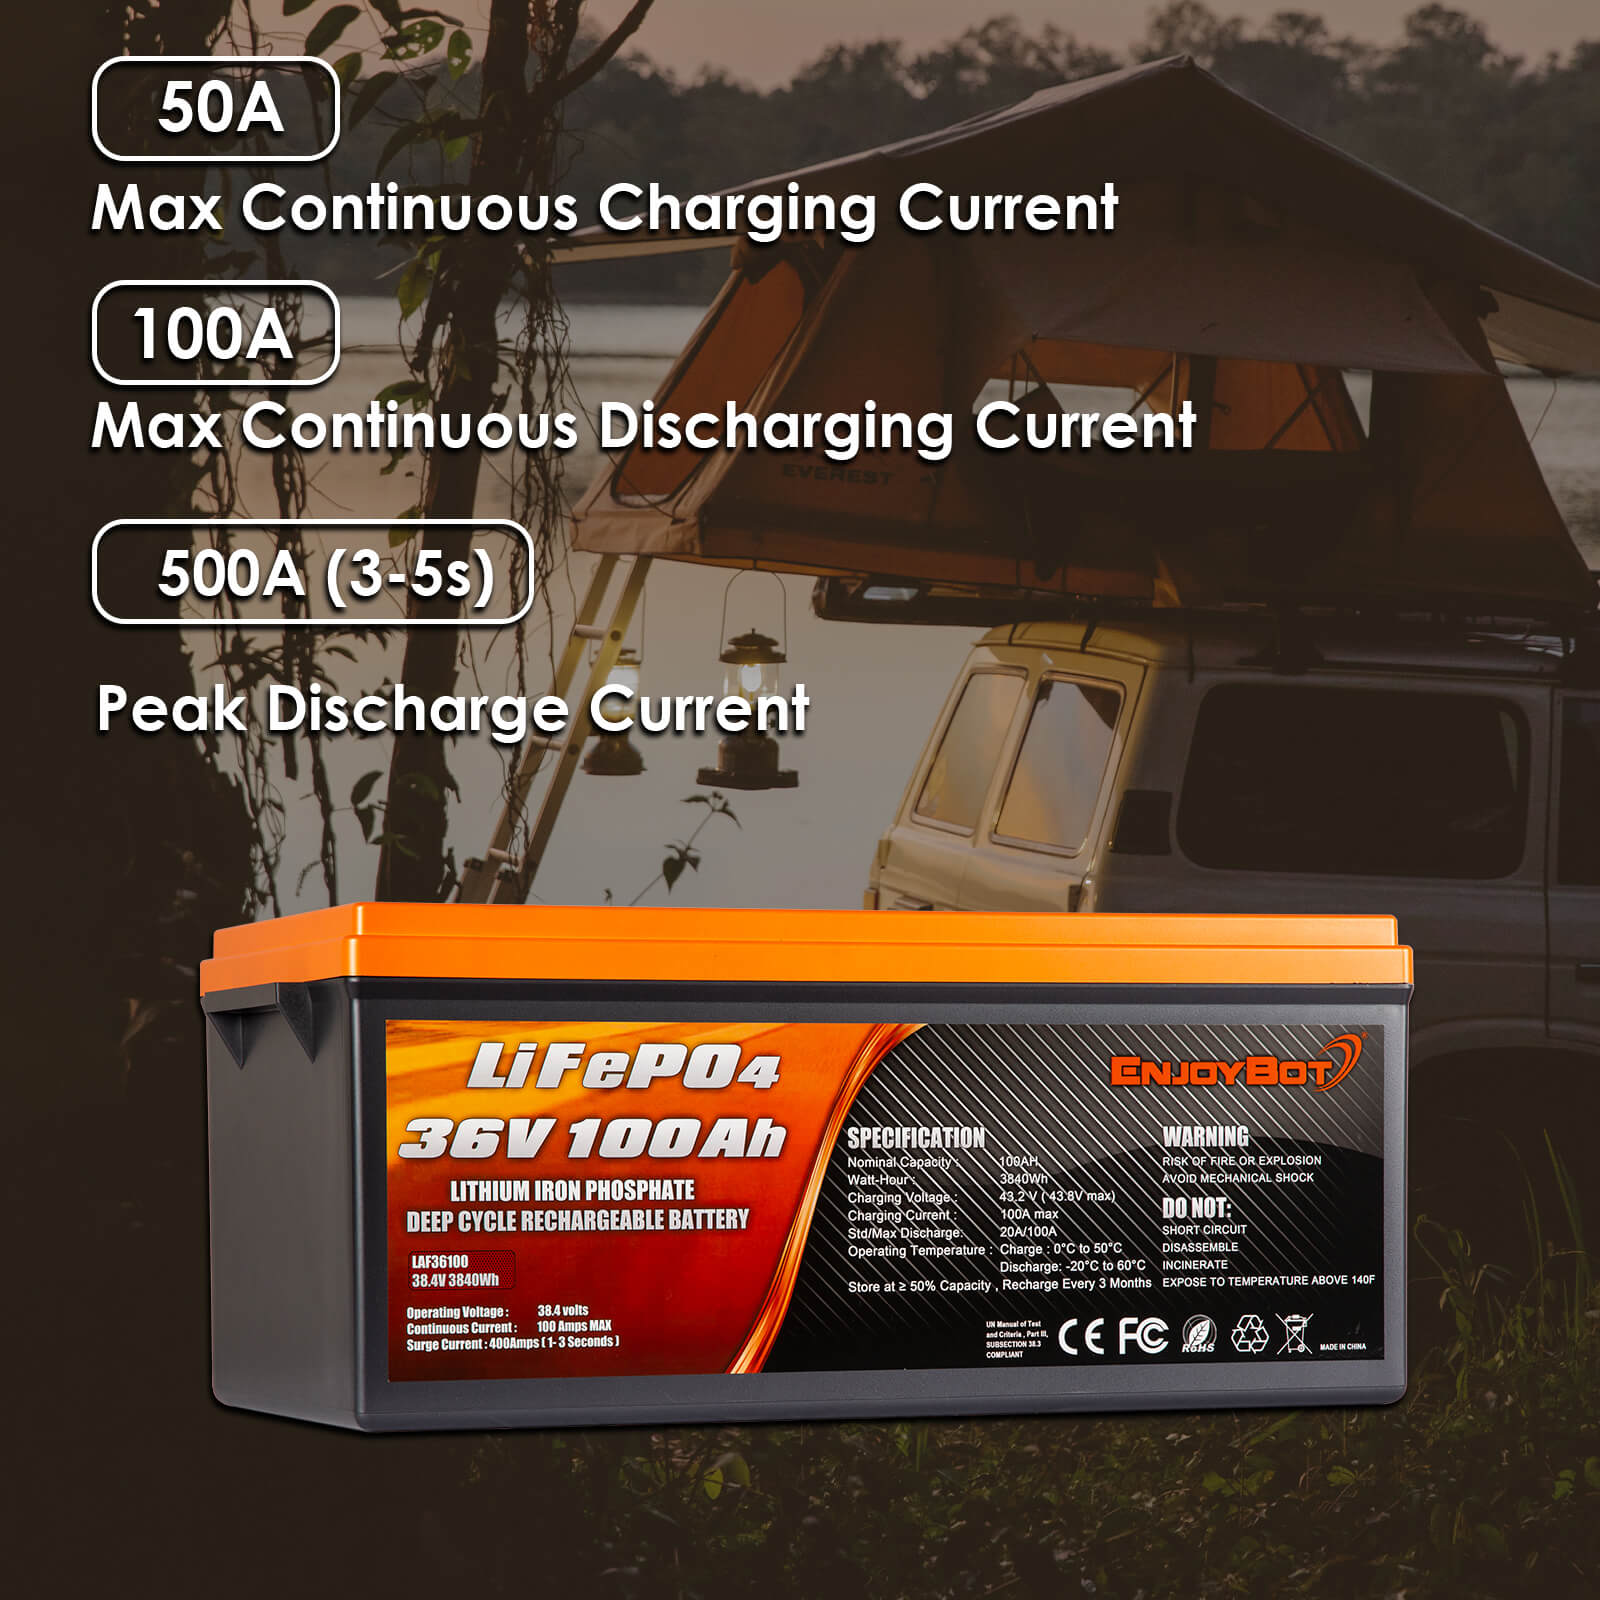 Enjoybot 36v 100ah LiFePO4 Battery - Max Current